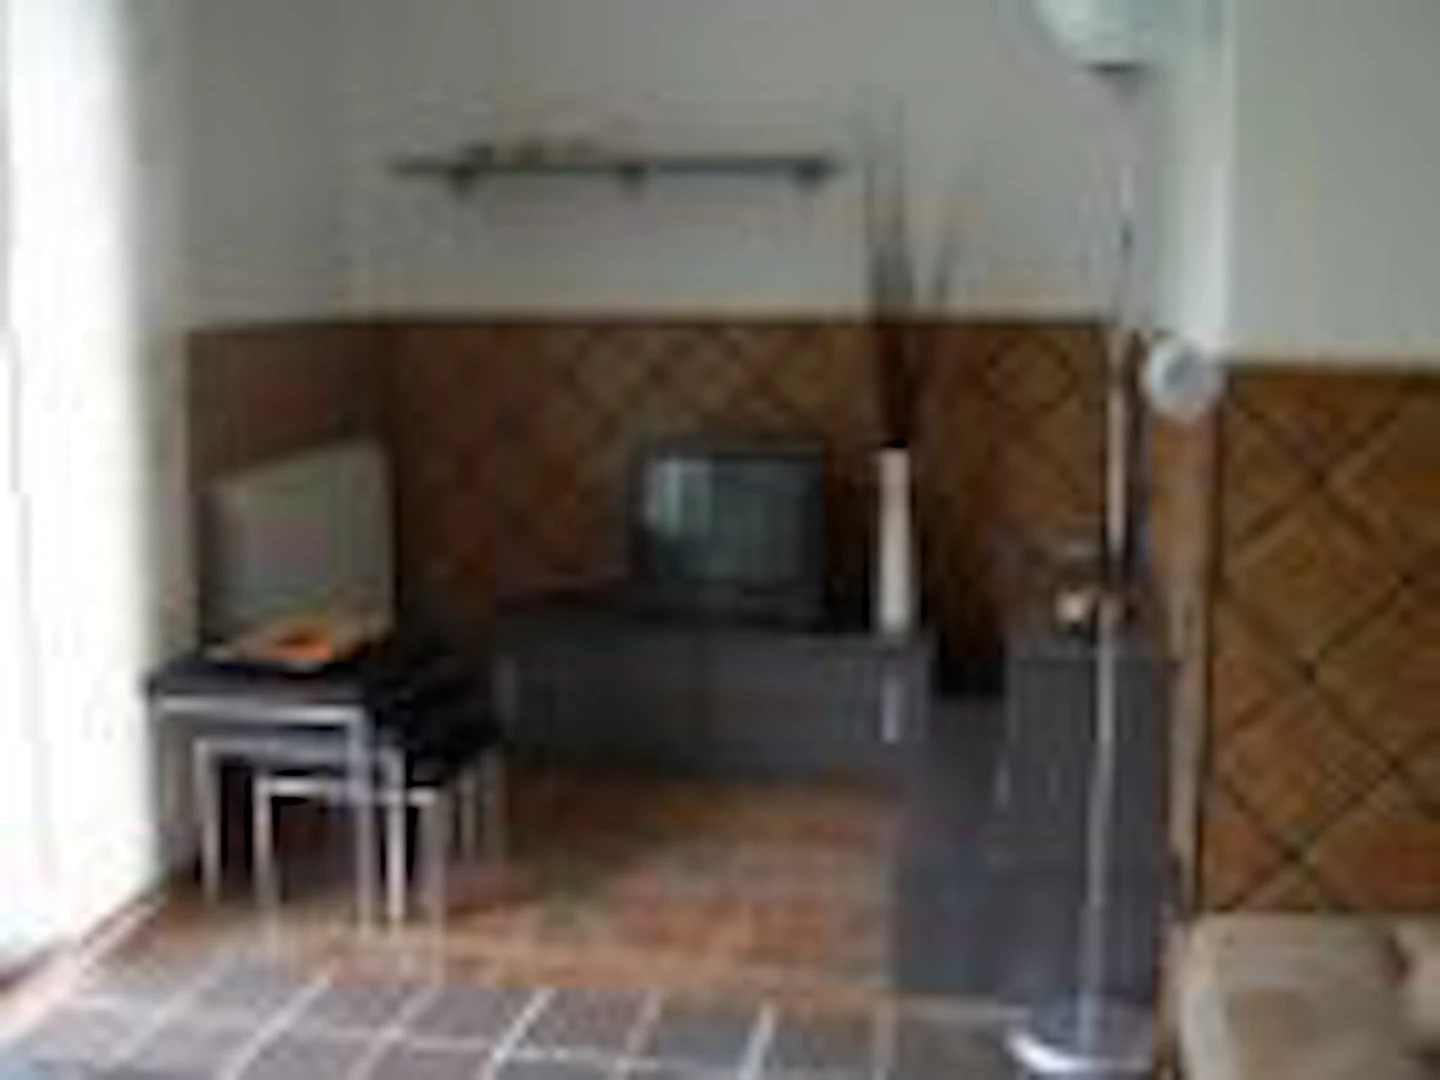 Accommodation with 3 bedrooms in Donostia/san Sebastián